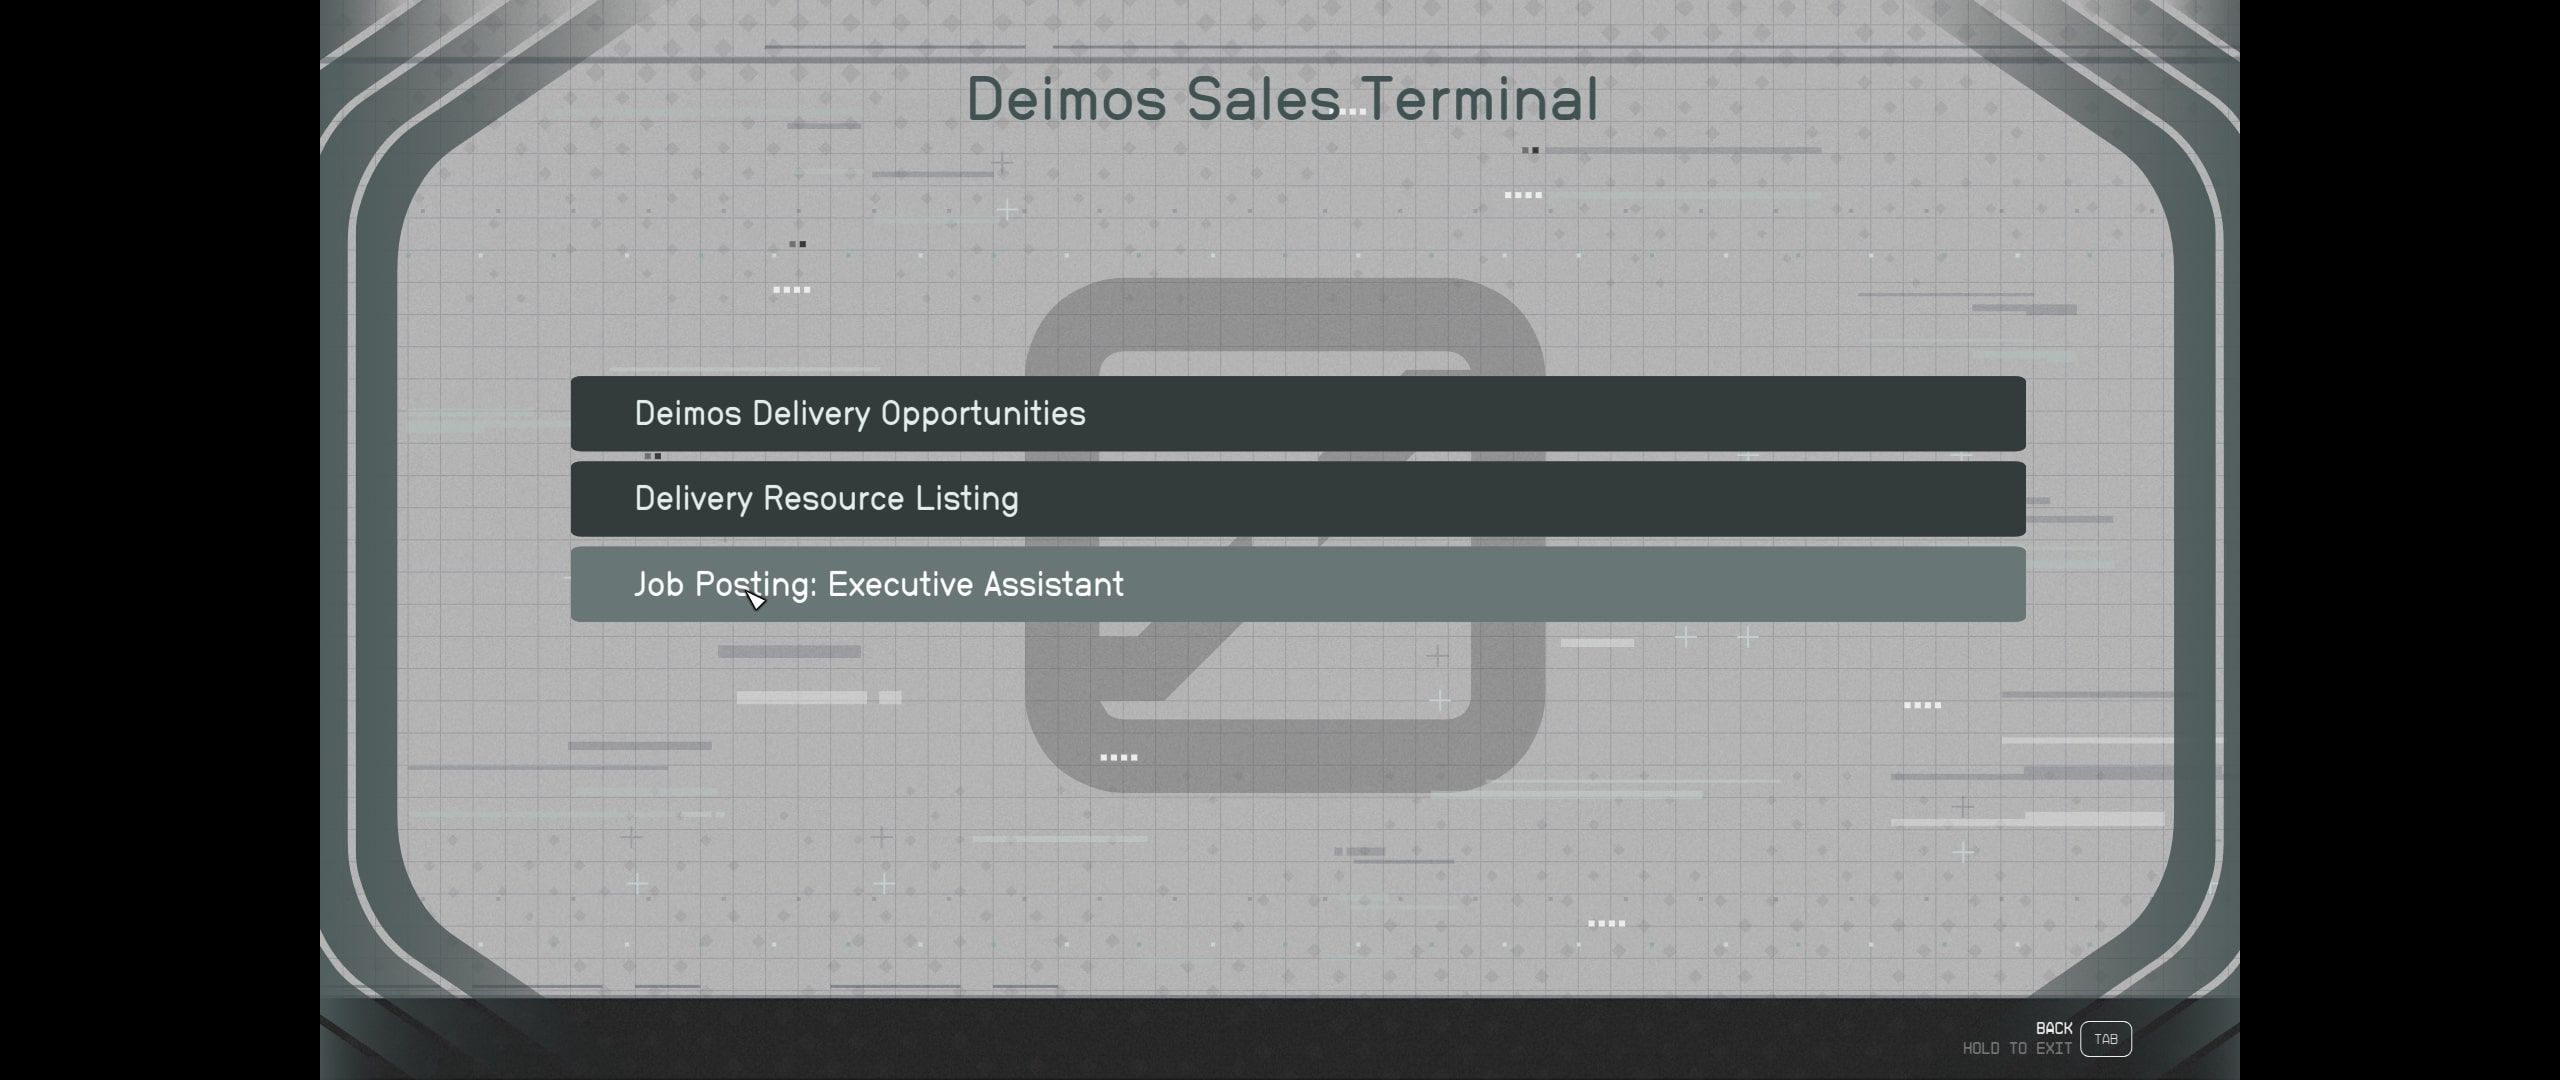 The Deimos Sales Terminal menu in Starfield